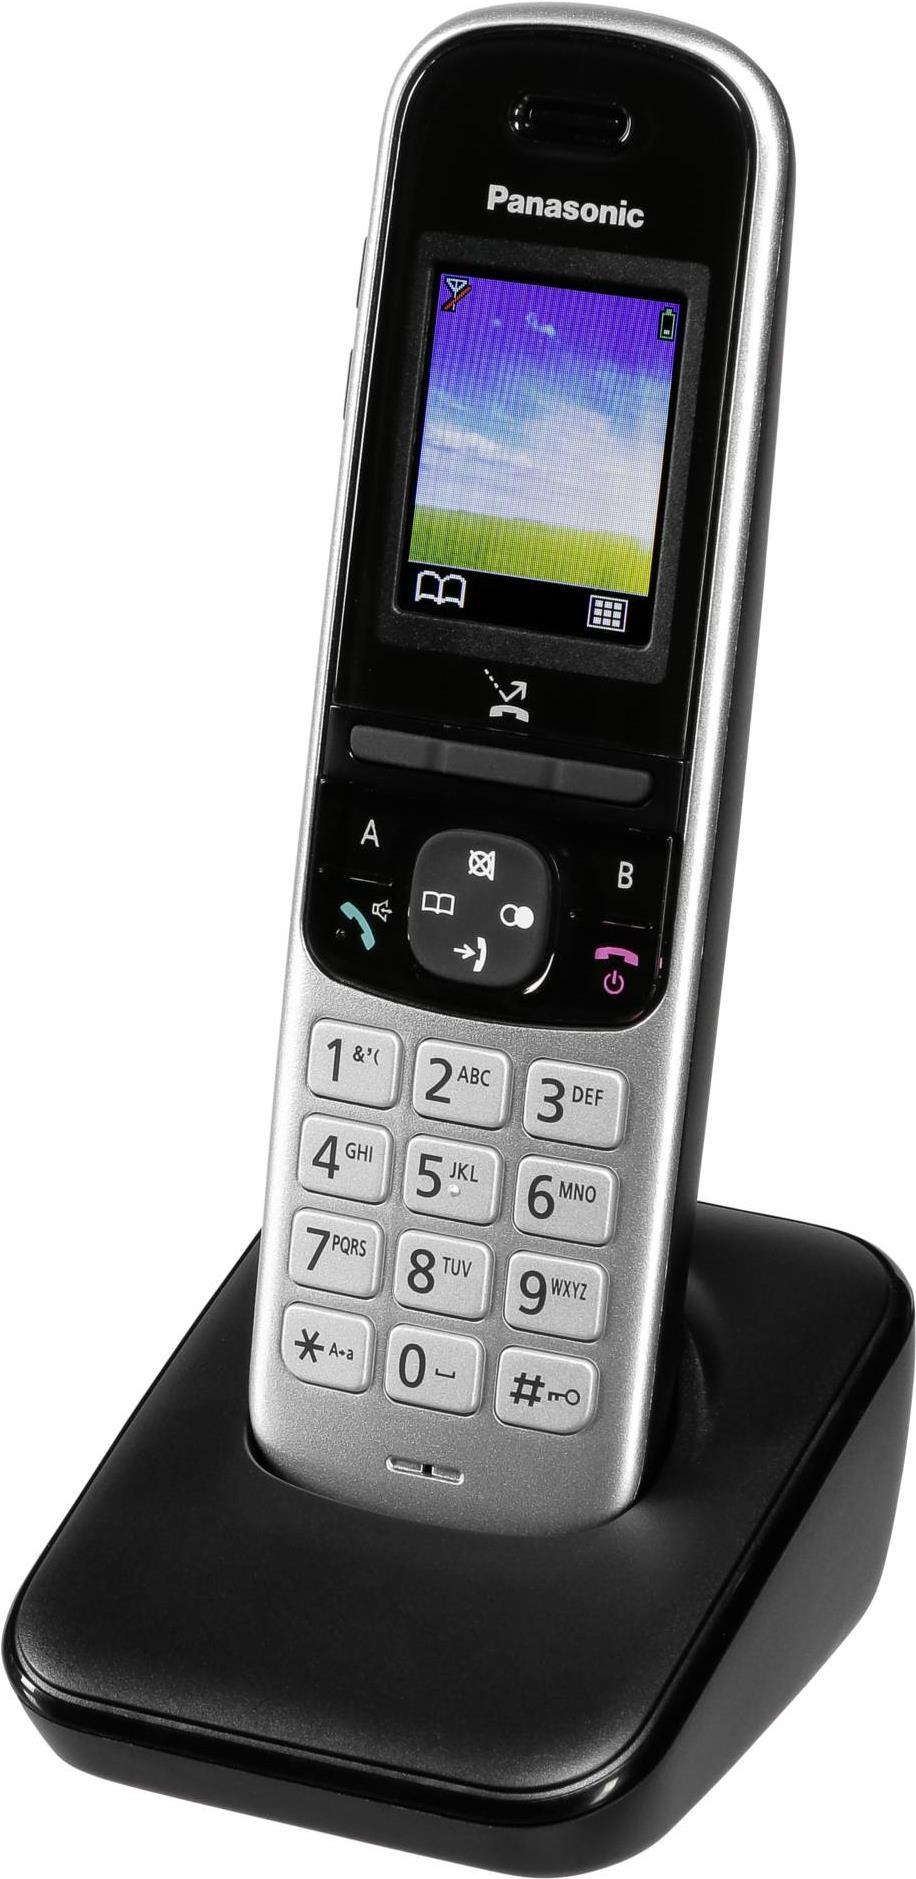 Panasonic KX TGH710 DECT Telefon Kabelloses Mobilteil Freisprecheinrichtung 200 Eintragungen Anrufer Identifikation Schwarz (KX TGH710GS)  - Onlineshop JACOB Elektronik